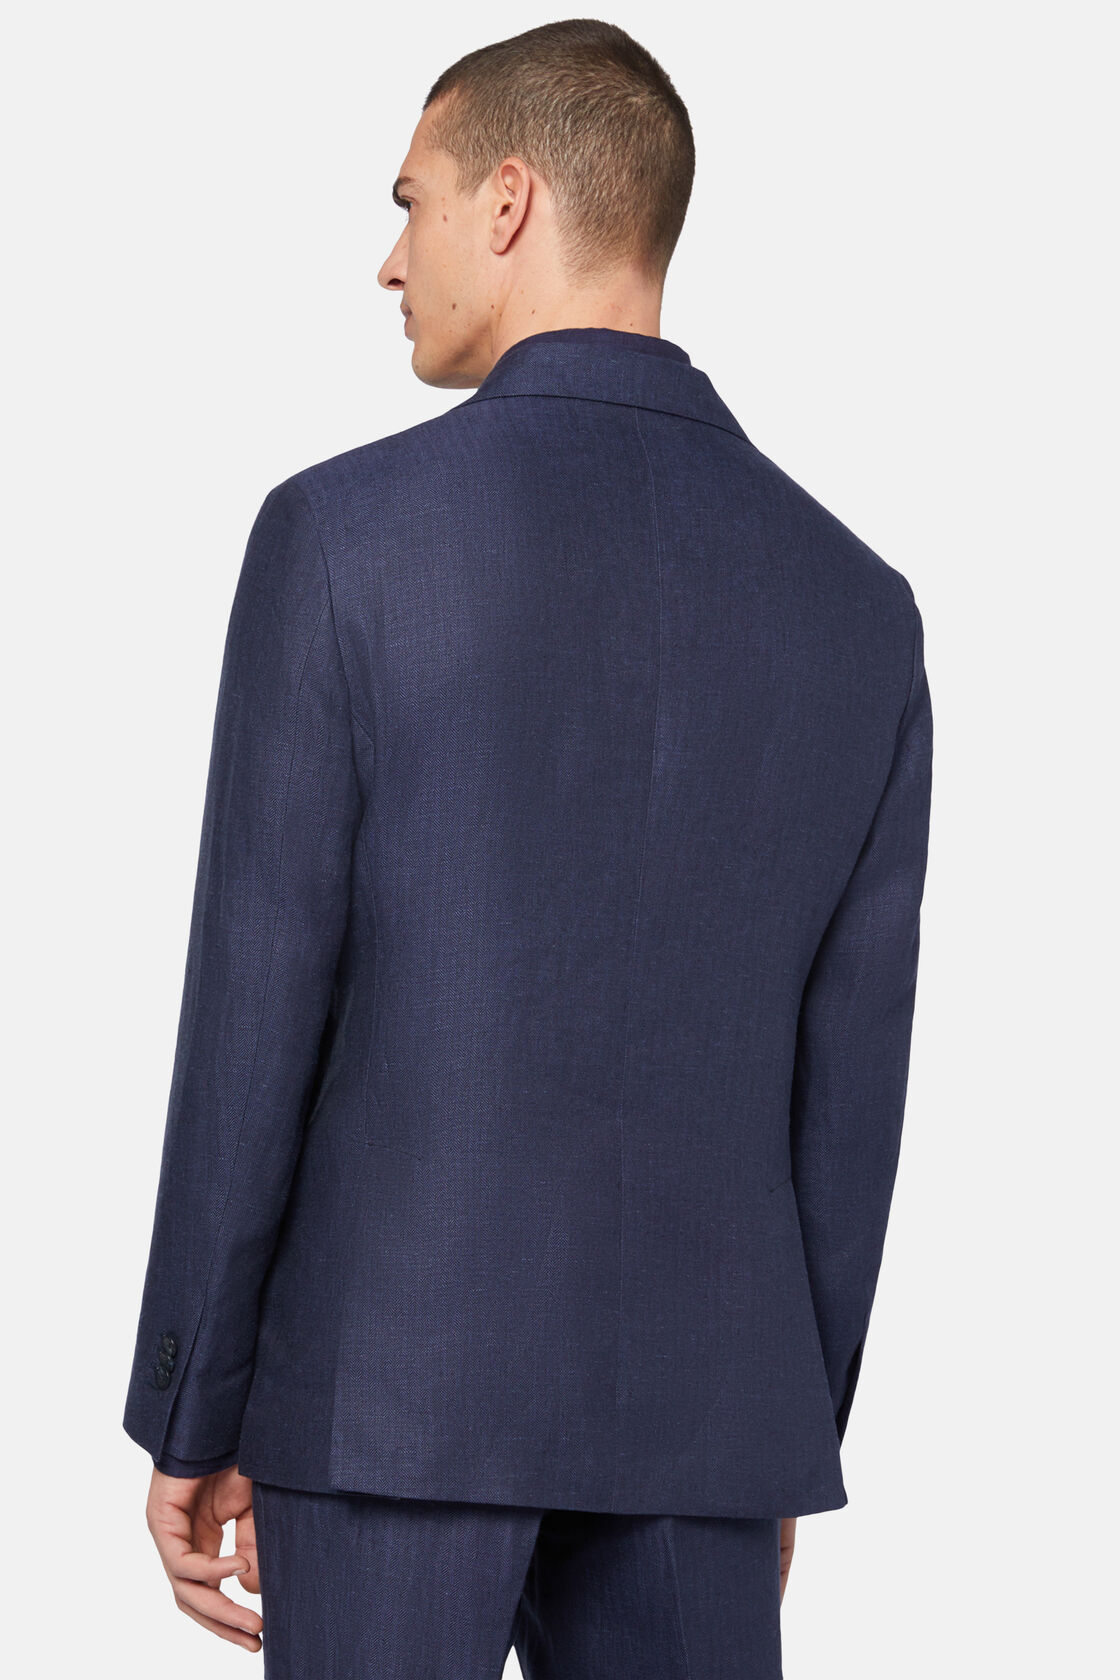 Herringbone Linen Suit Style Capri, Navy blue, hi-res